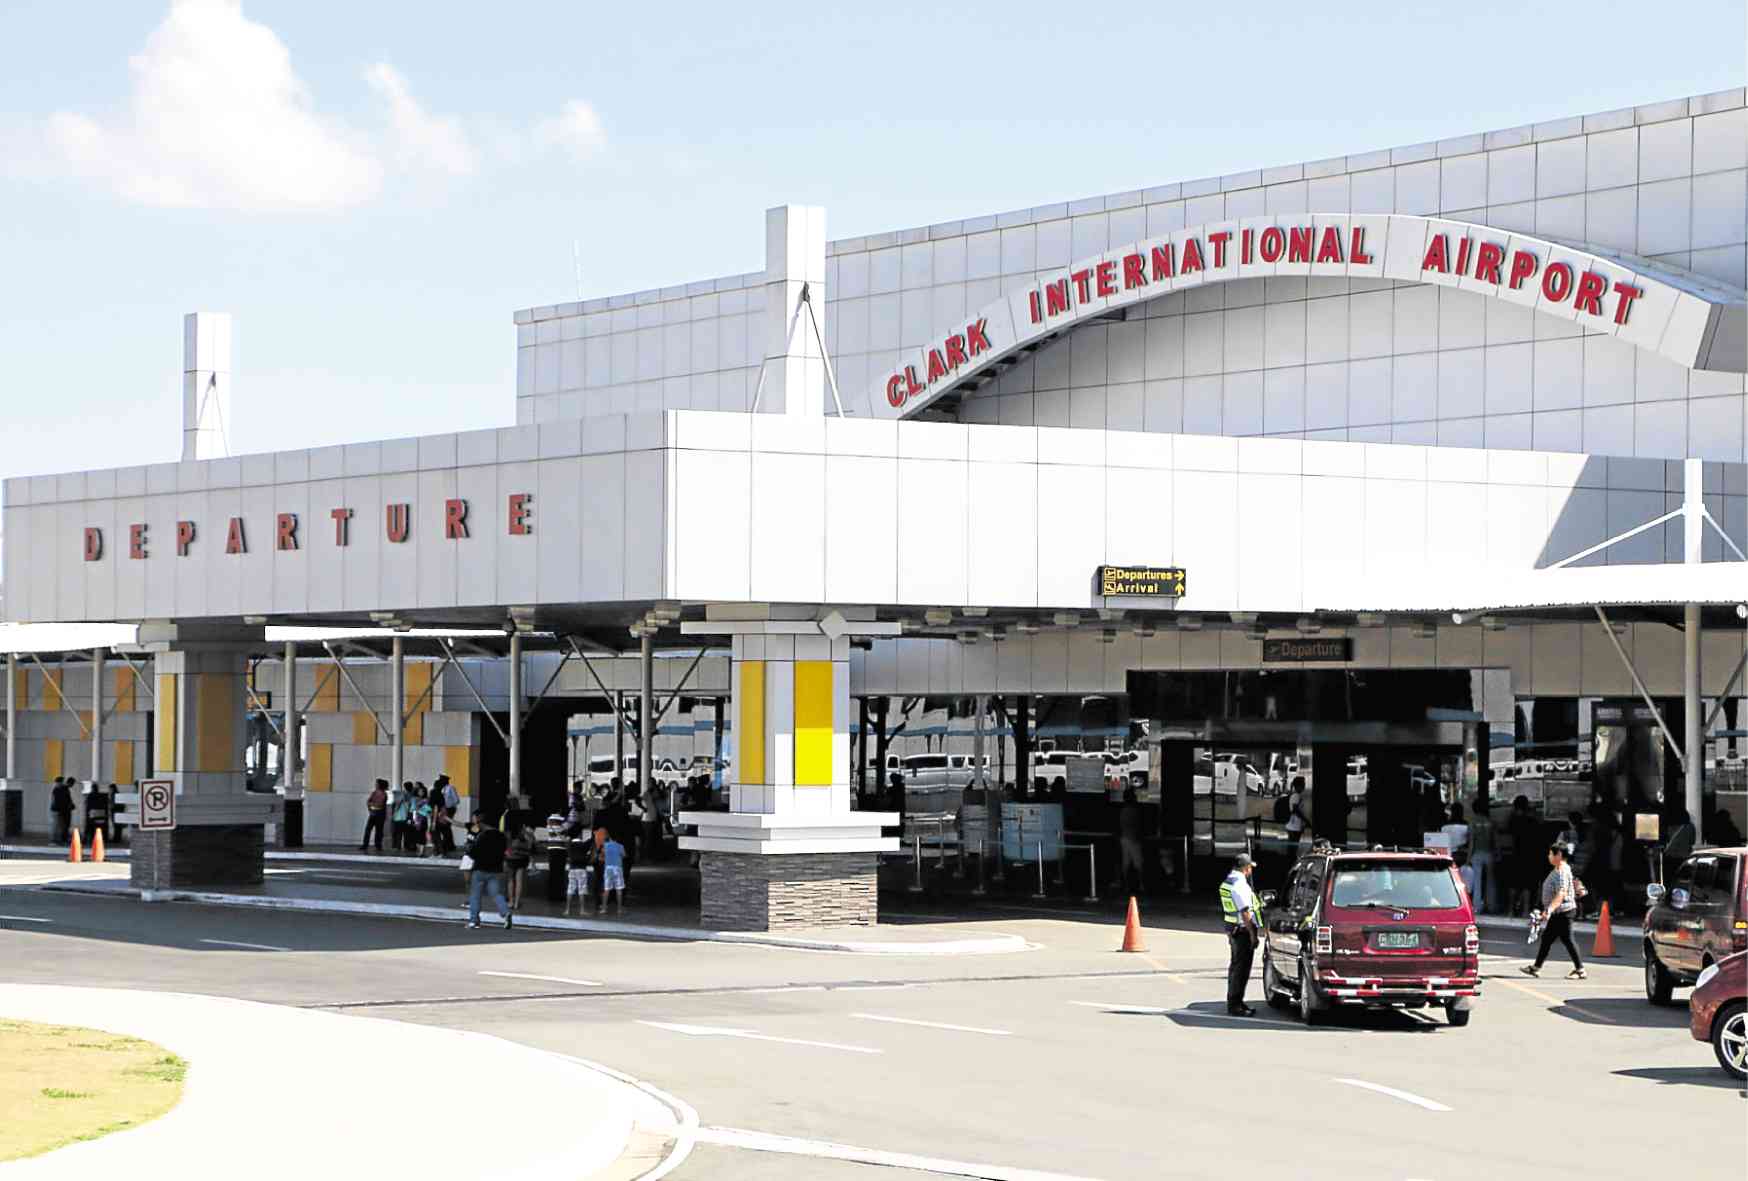 Clark airport serves 1M passengers in 3 months